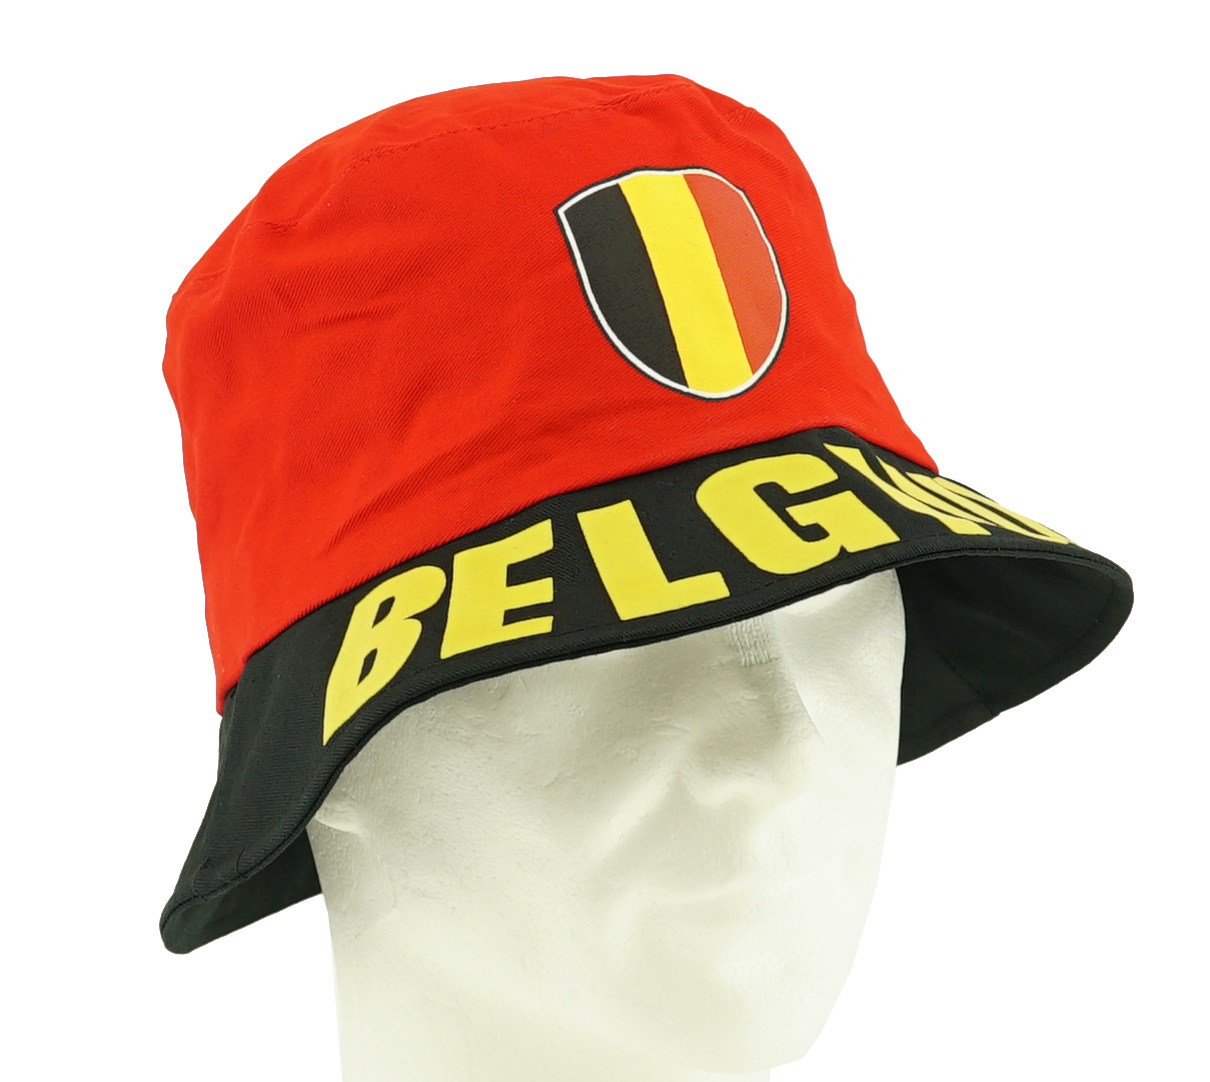 hats travel agency belgium